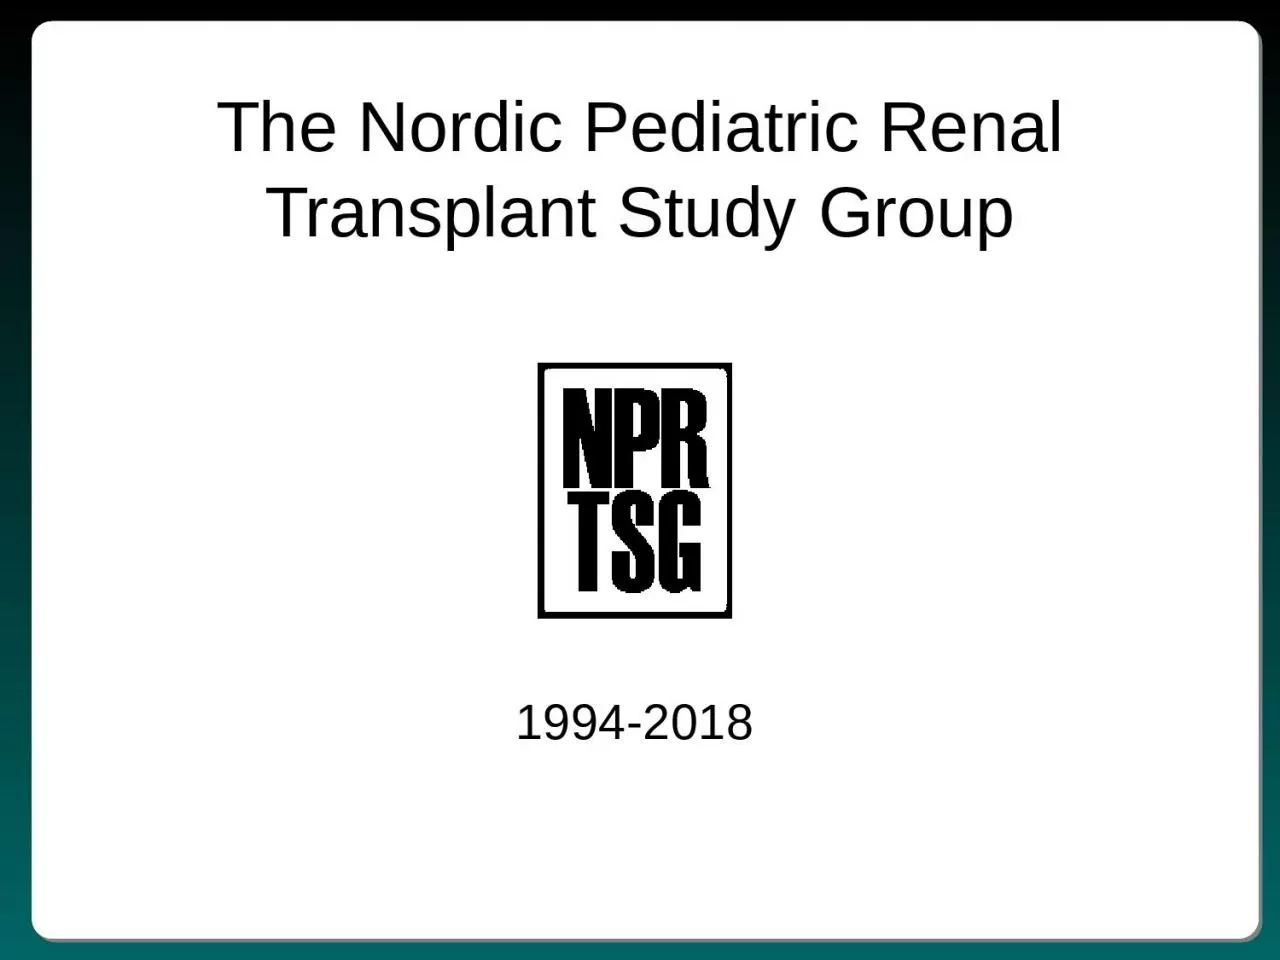 The Nordic Pediatric Renal Transplant Study Group